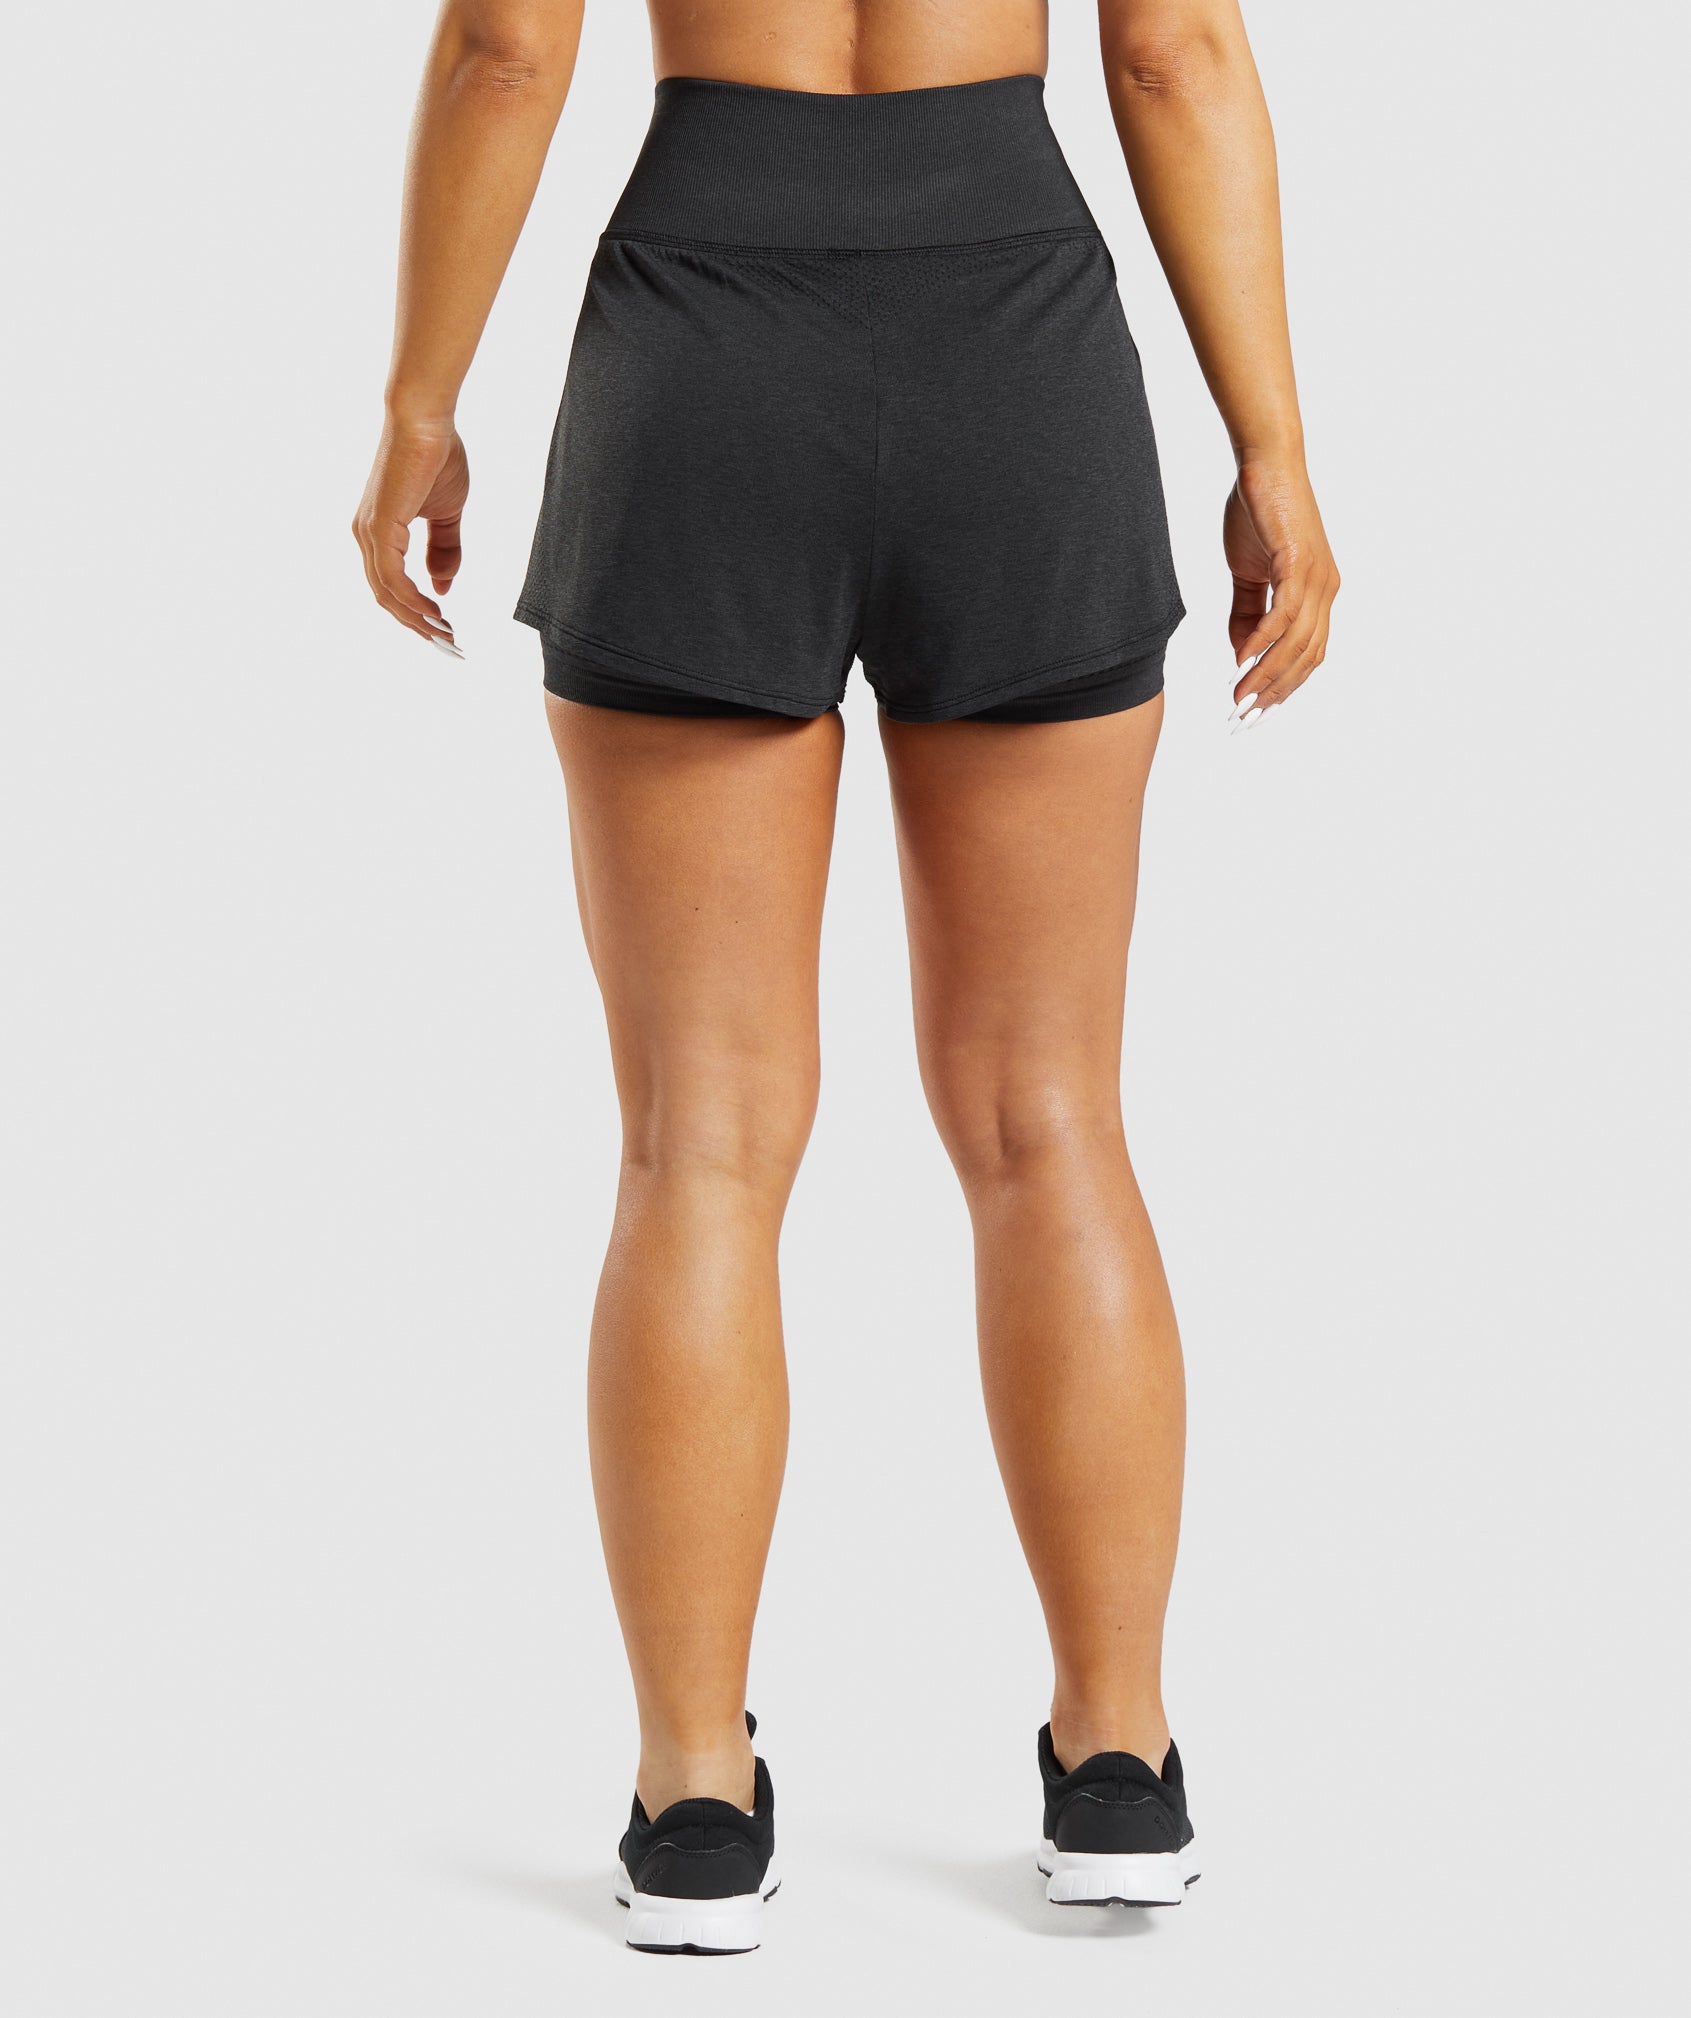 Gymshark Vital Seamless 2.0 Shorts Pink Size M - $25 (37% Off